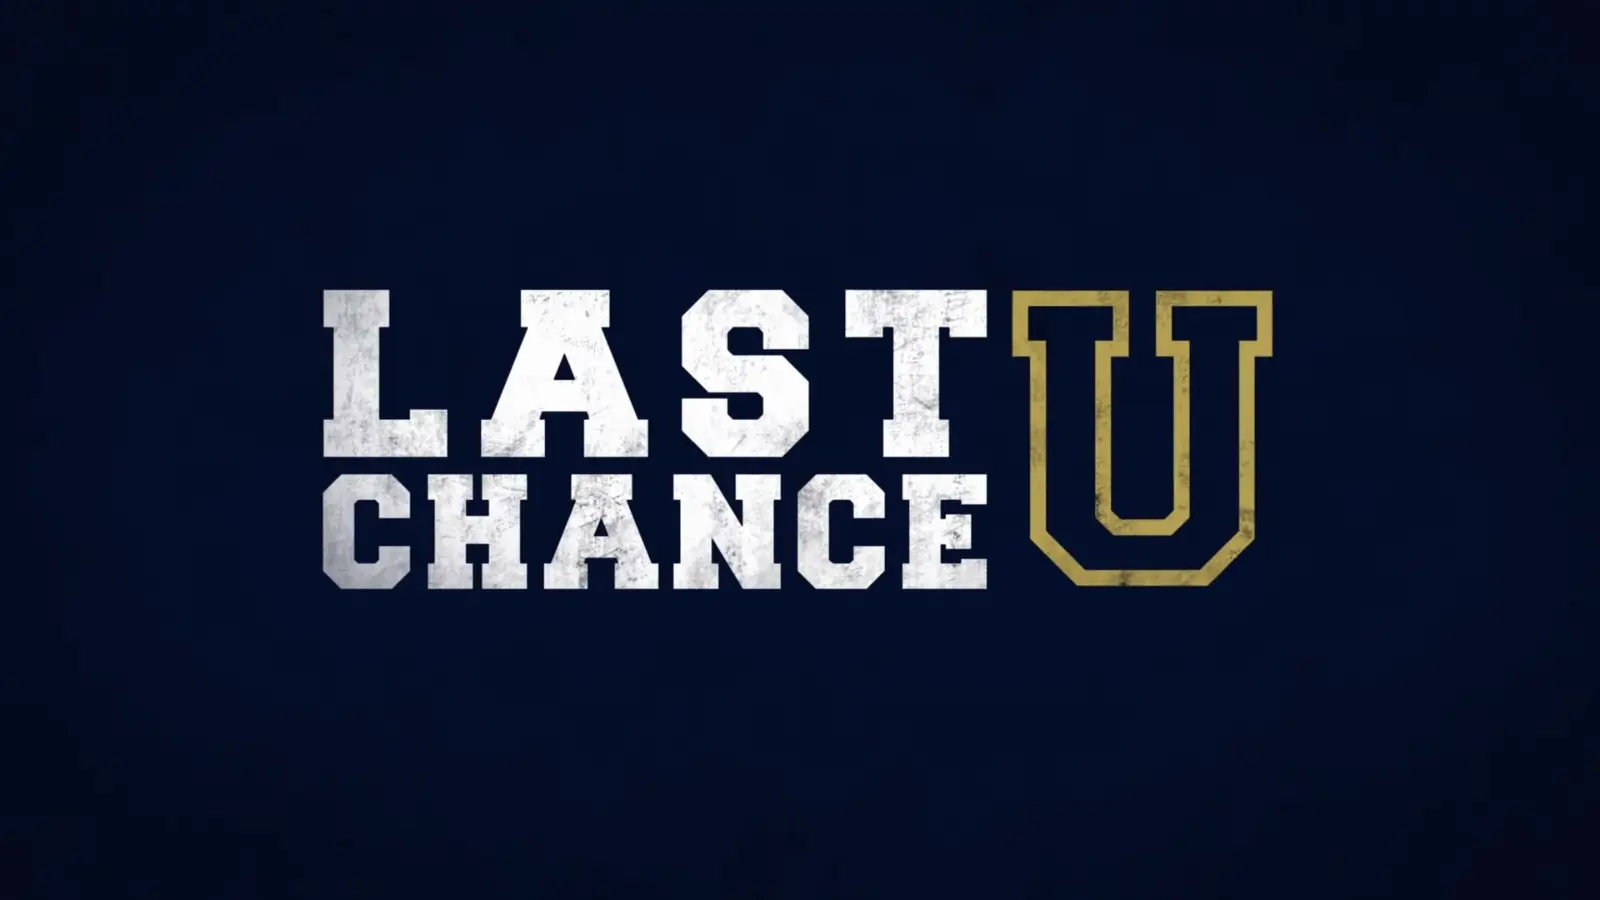 Last Chance U, série da Netflix